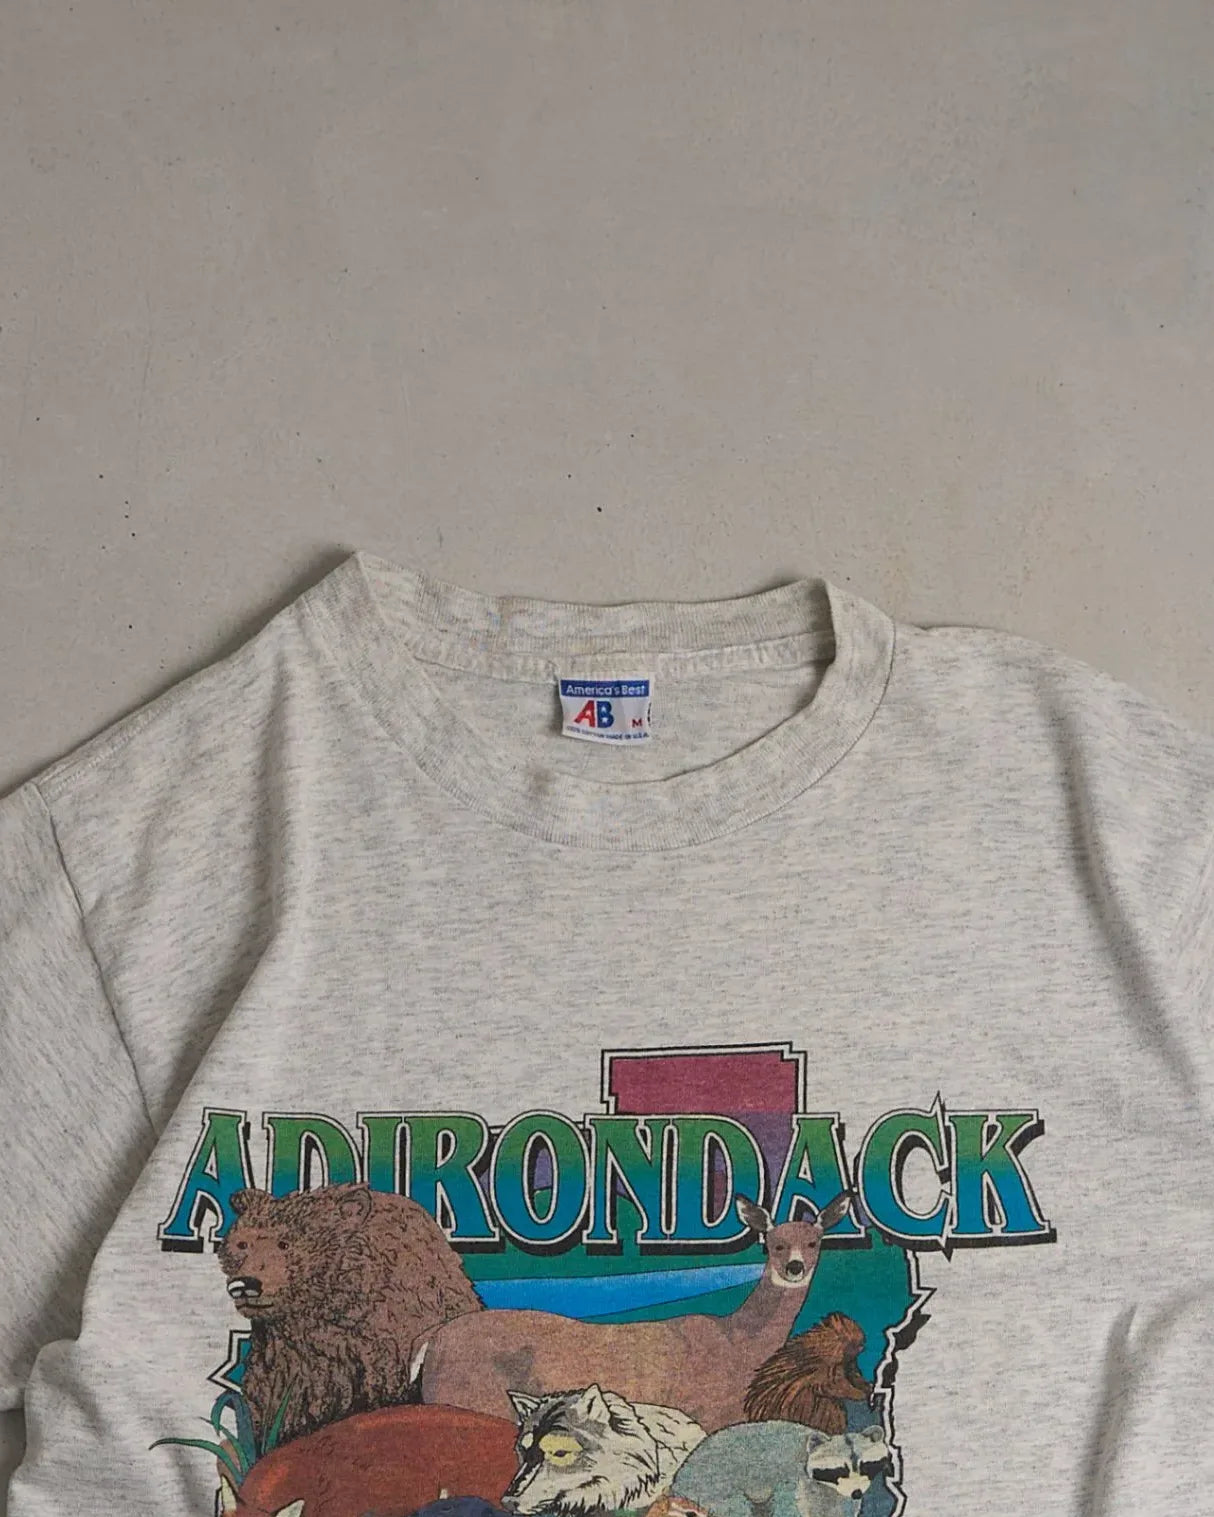 Adirondack Wilderness Graphic Single Stitch T-Shirt Top